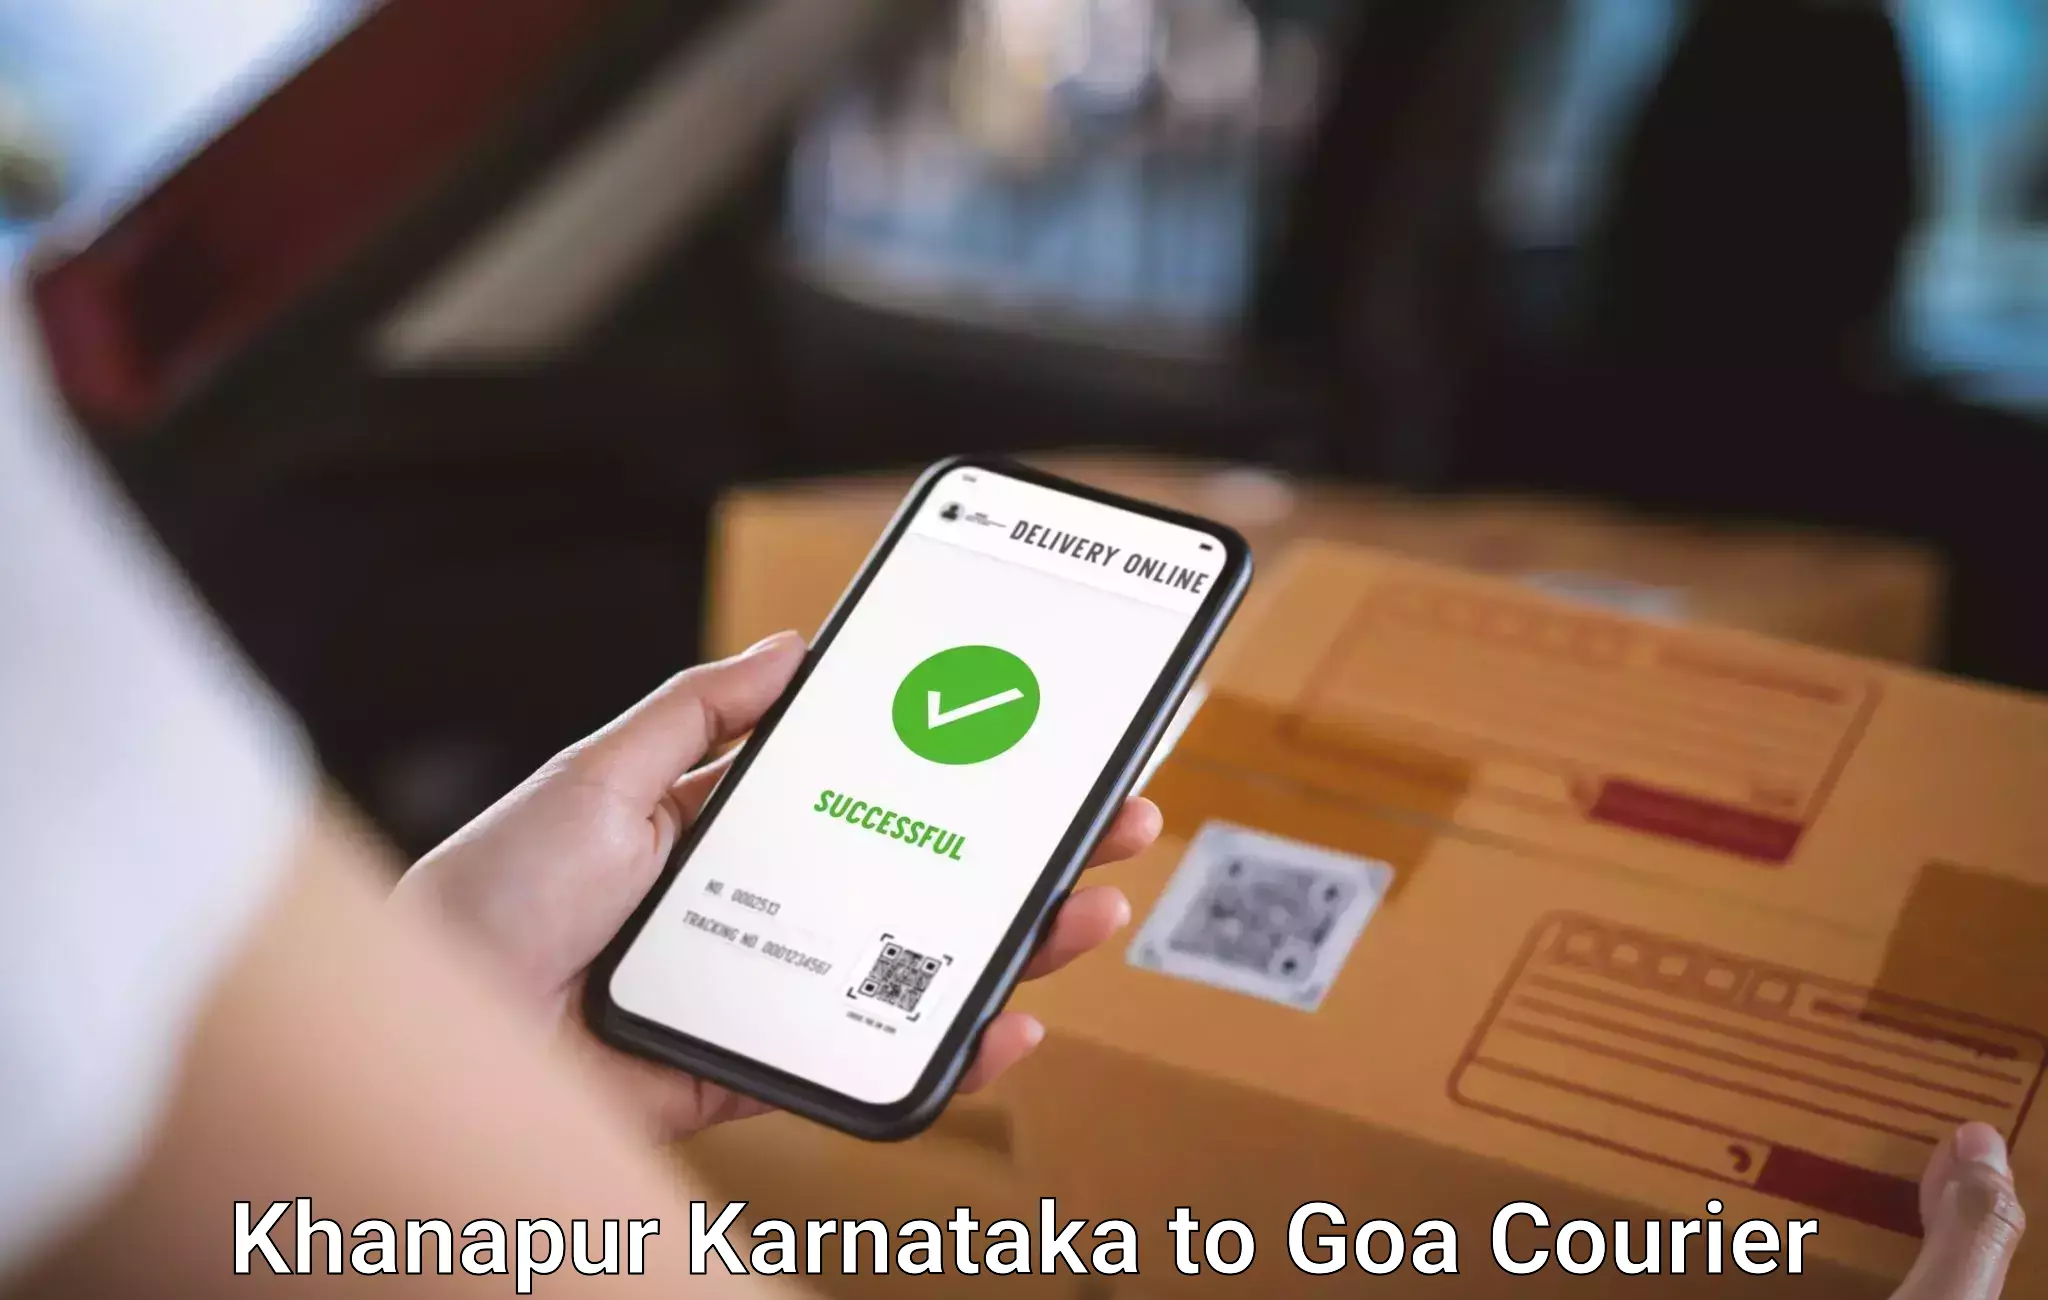 Baggage delivery scheduling Khanapur Karnataka to Goa